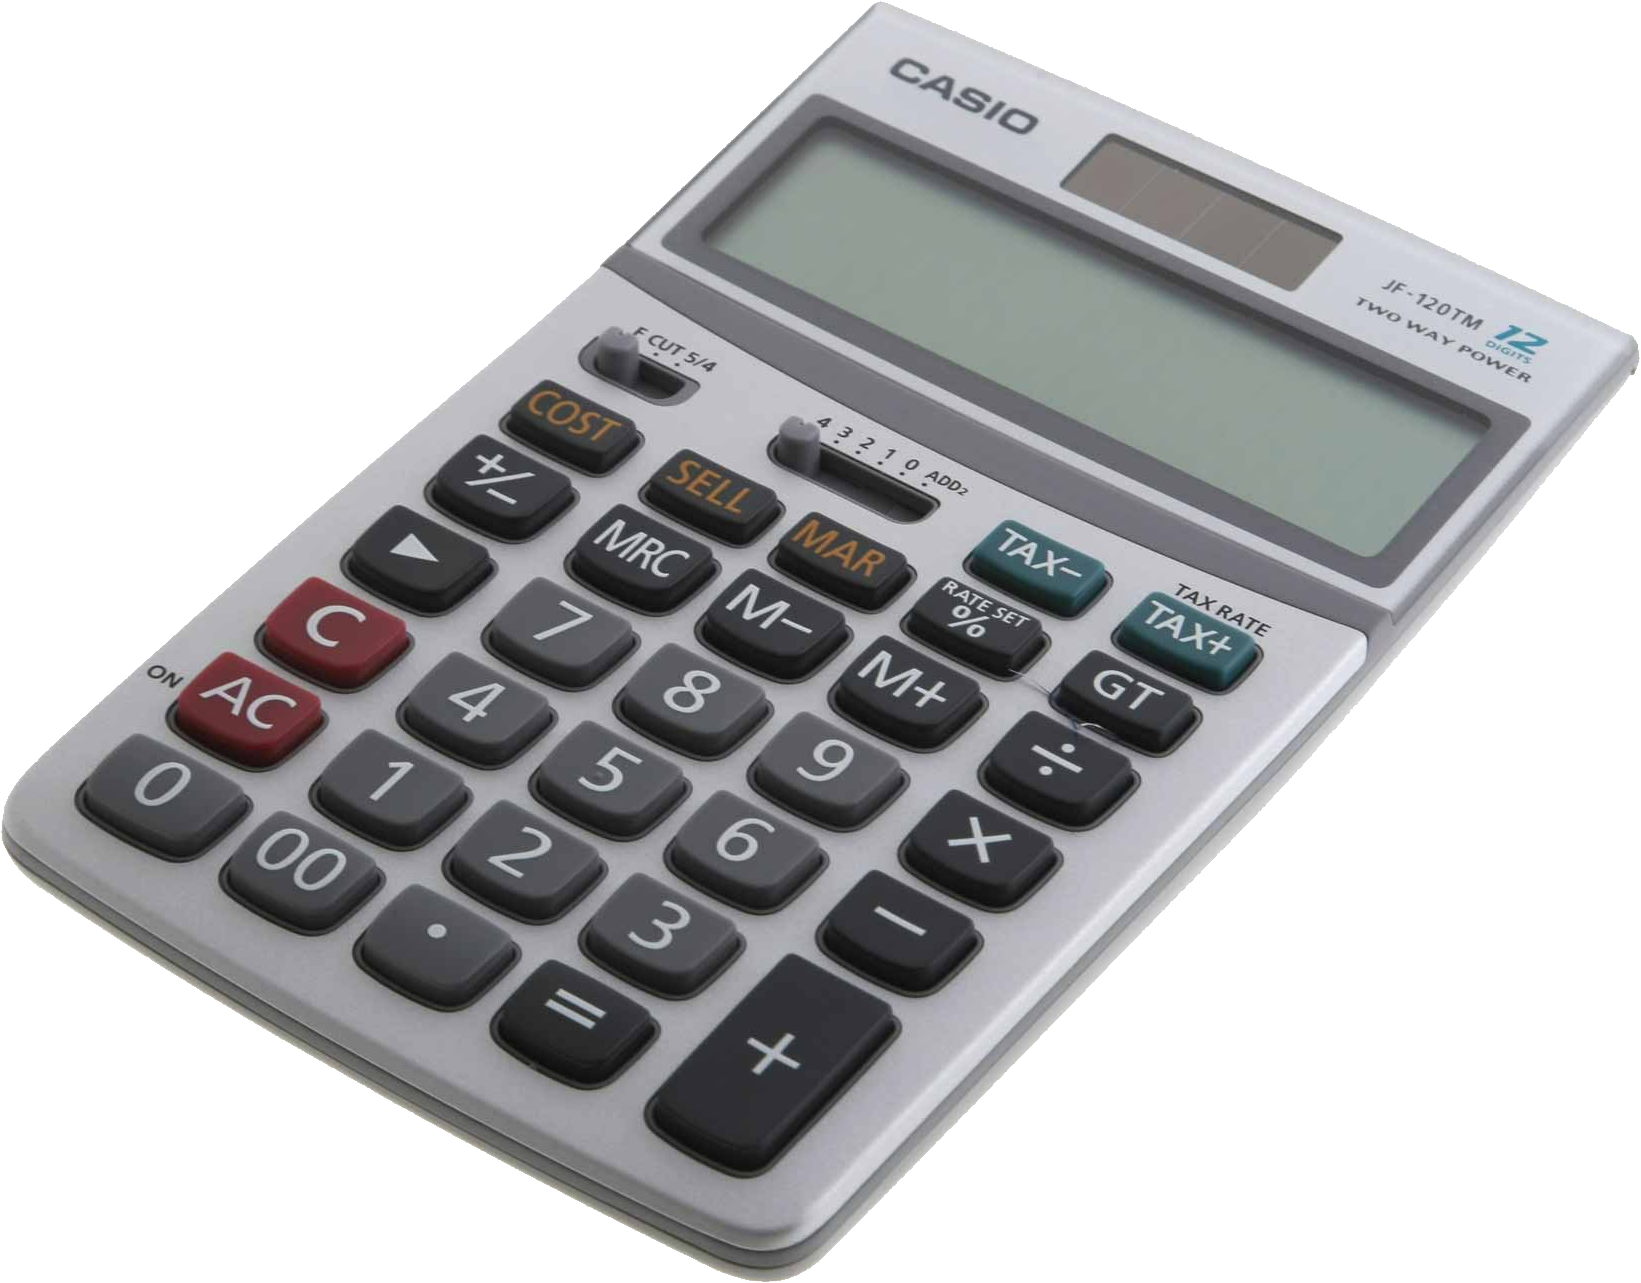 Calculator HD PNG - 93902